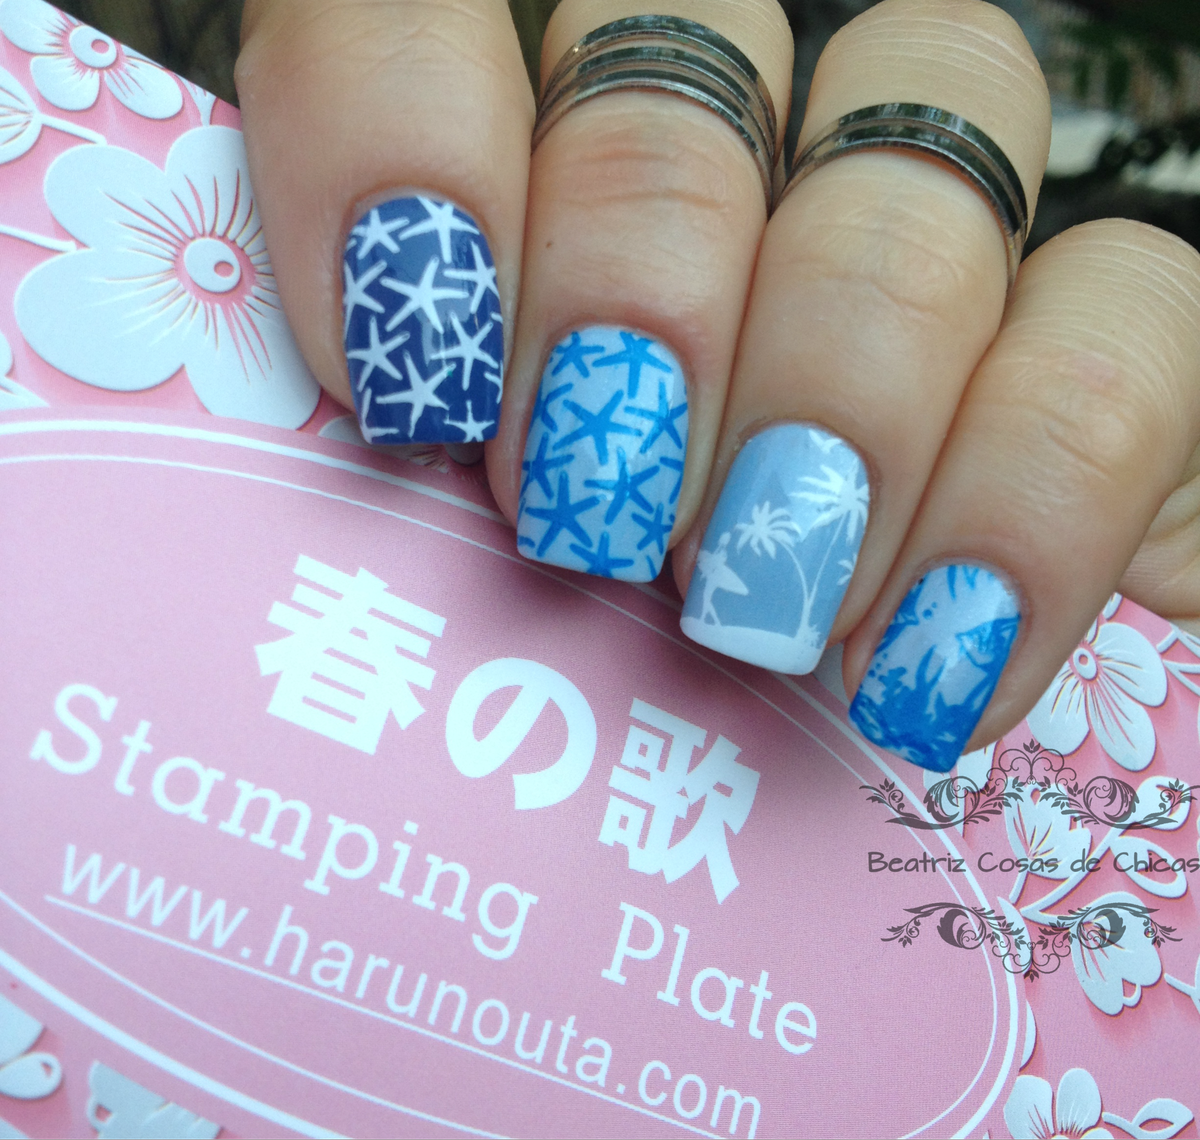 Manicura Azul Surfera con Kiko y Harunouta.2